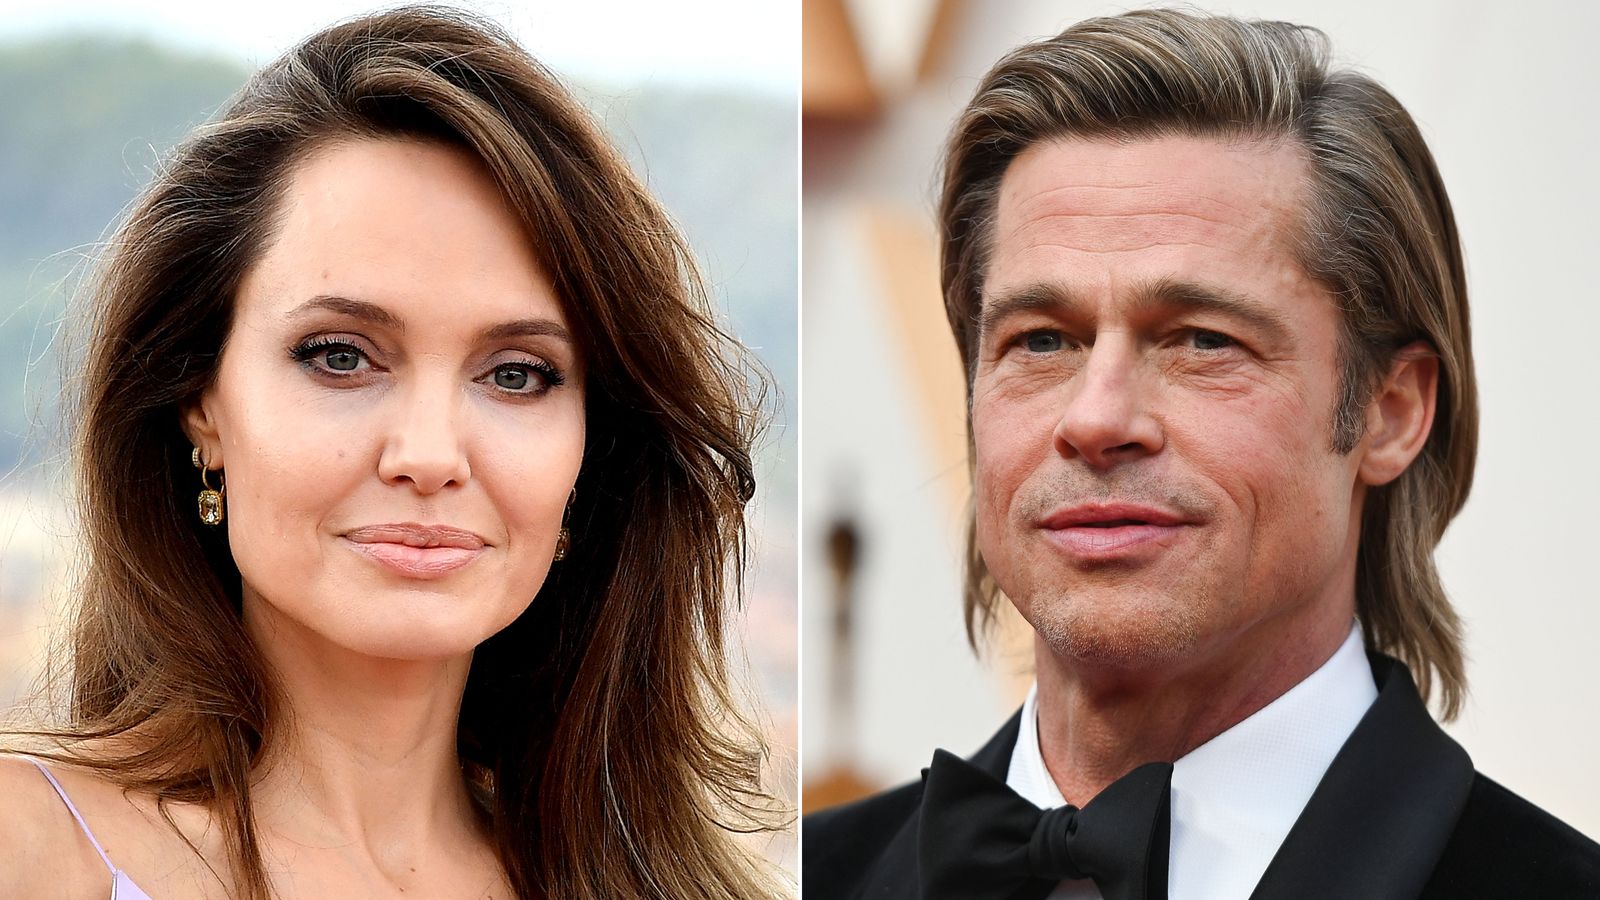 Video: Angelina Jolie makes new allegations of abuse against Brad Pitt | CNN